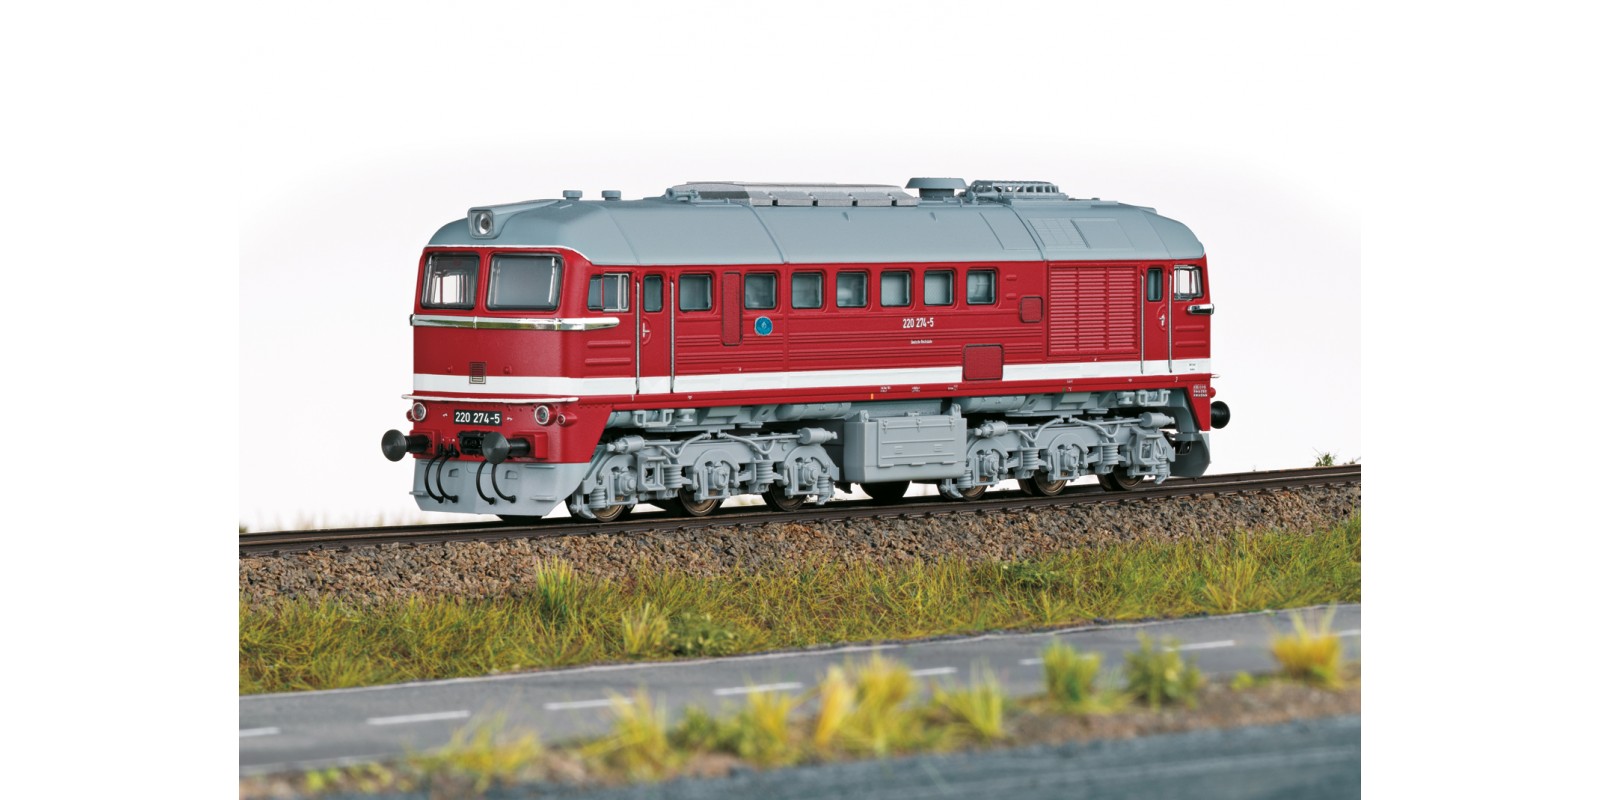 T25201 Class 220 Diesel Locomotive